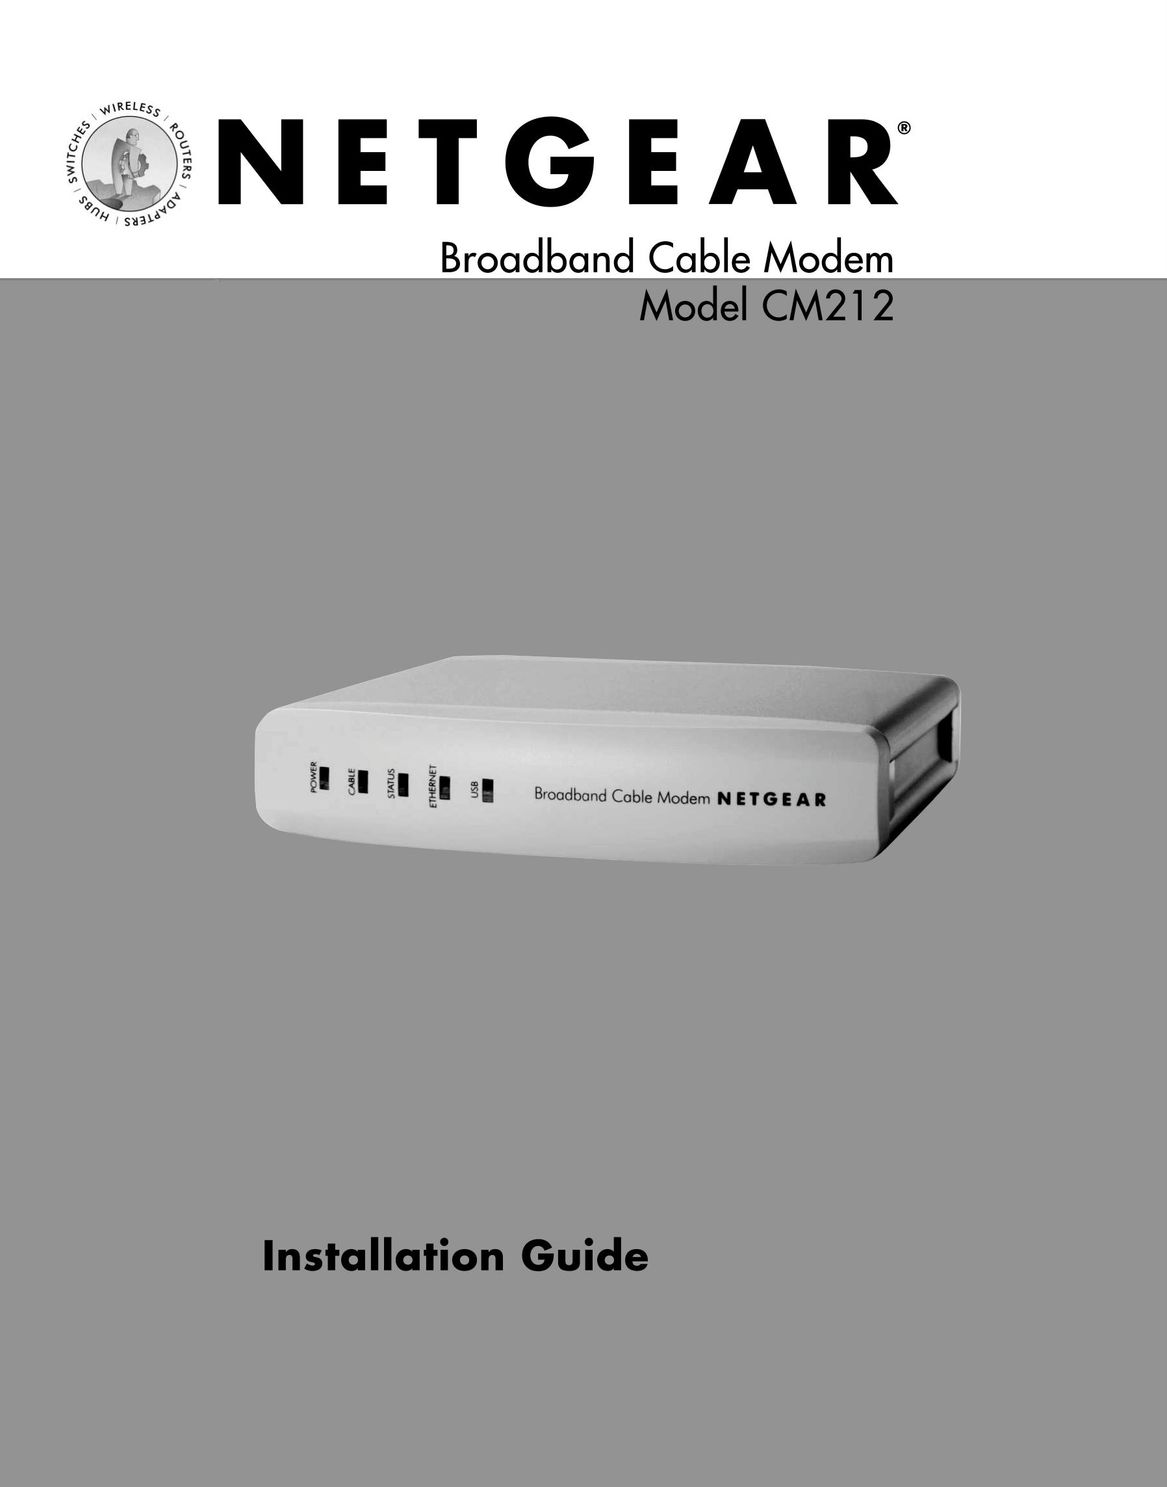 NETGEAR CM212 Modem User Manual